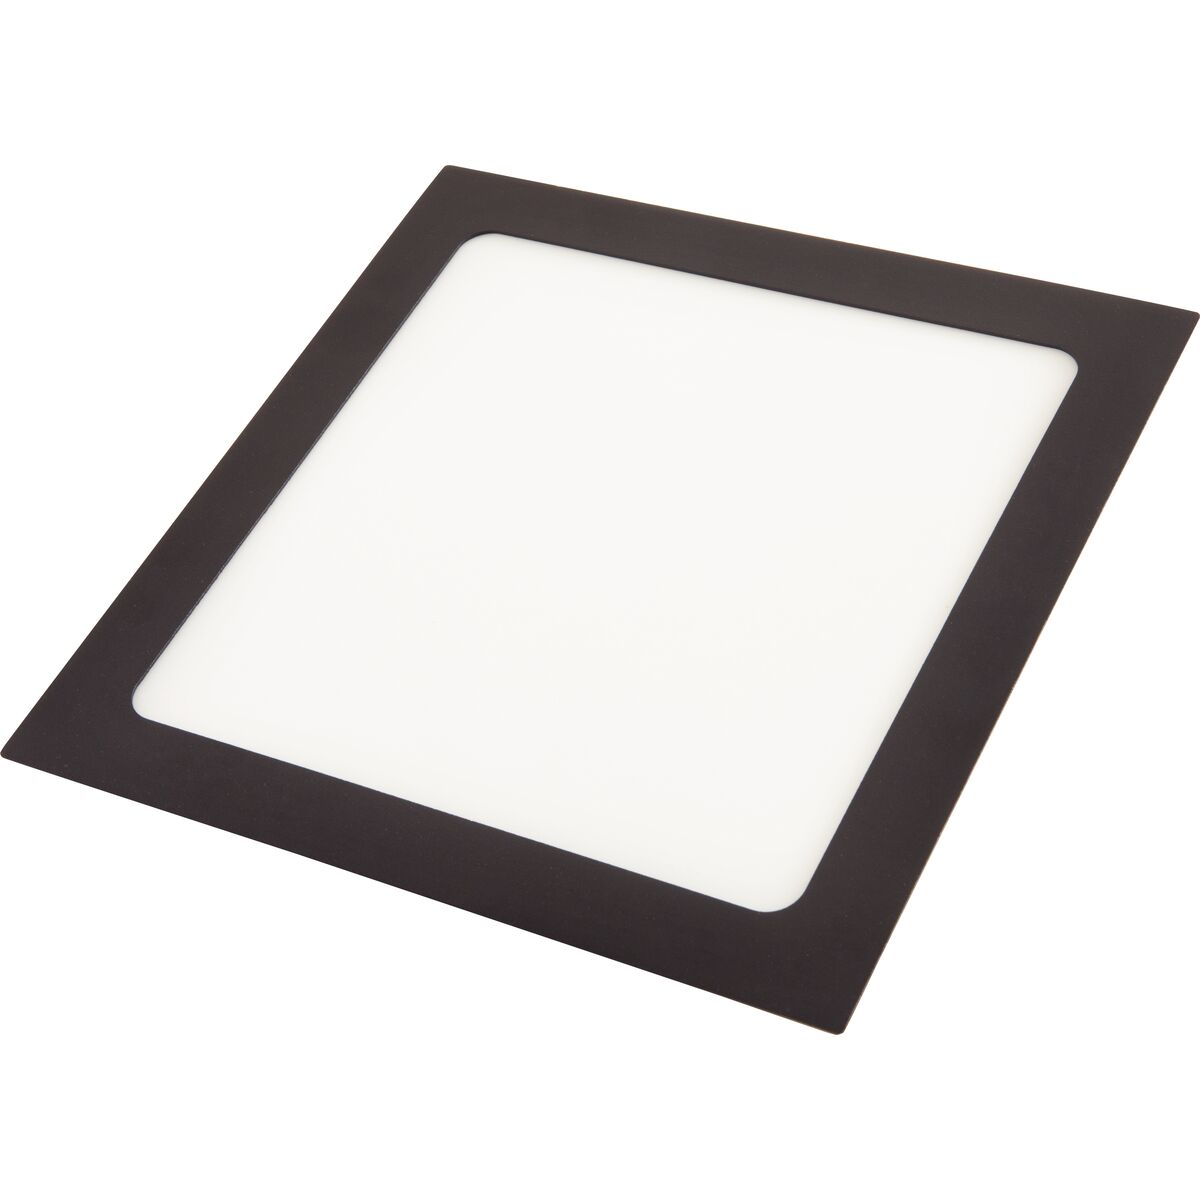 
Tramontina Black Inlay Square LED Ceiling Light 18 W, 6500 K, White Light
